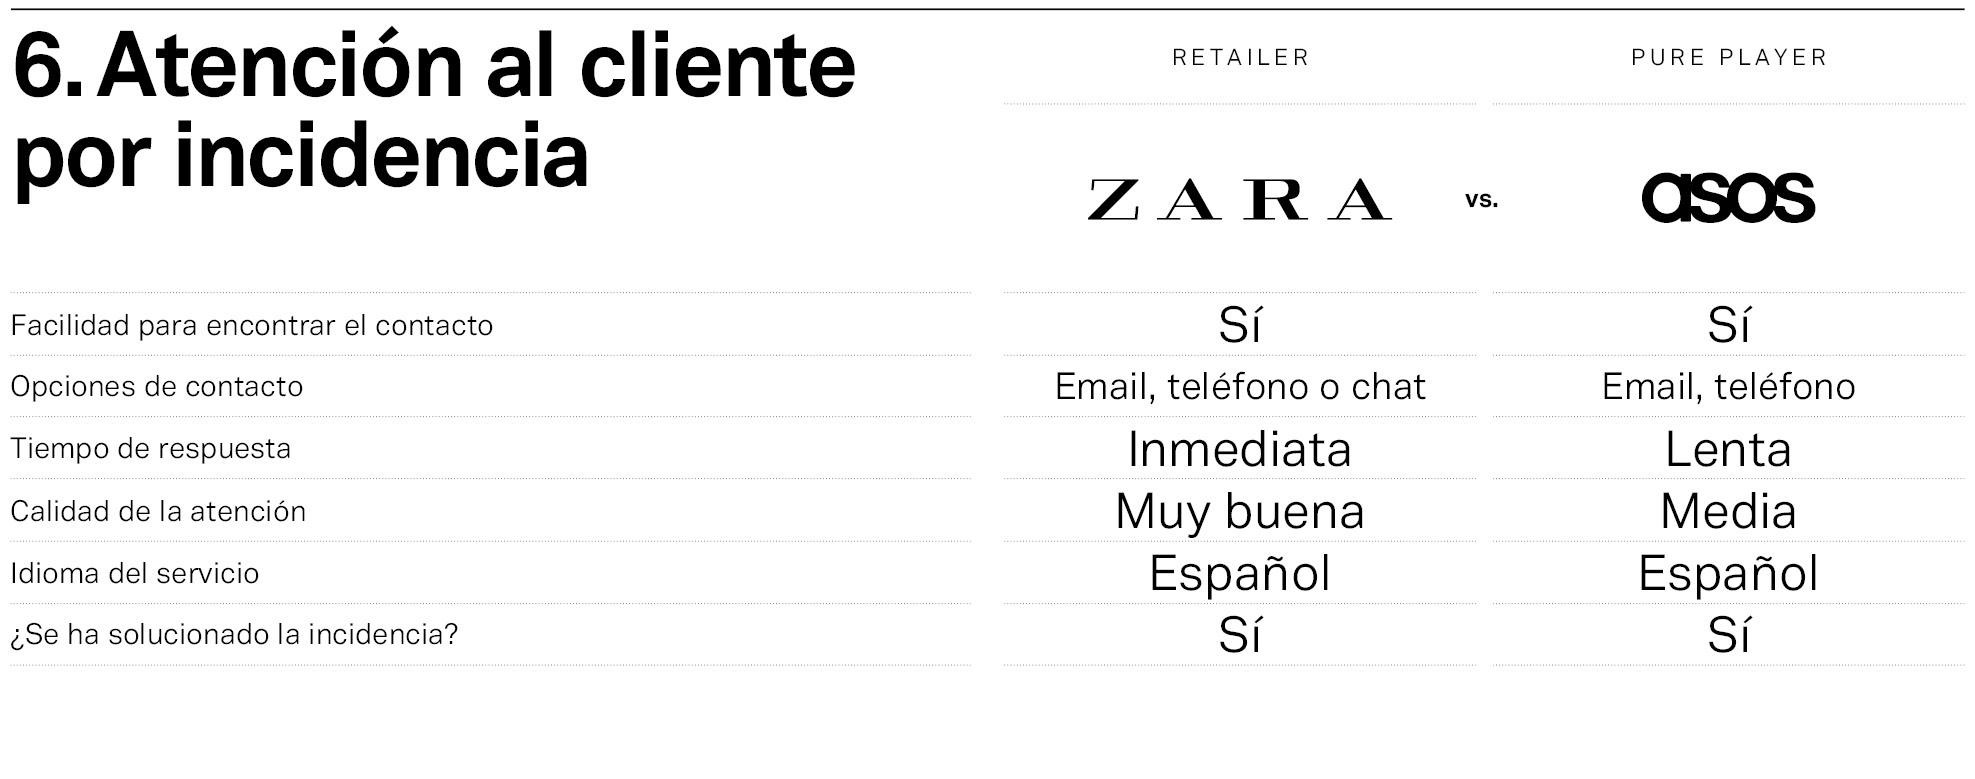 Mystery Shopper Zara vs Asos: atención al cliente por incidencia